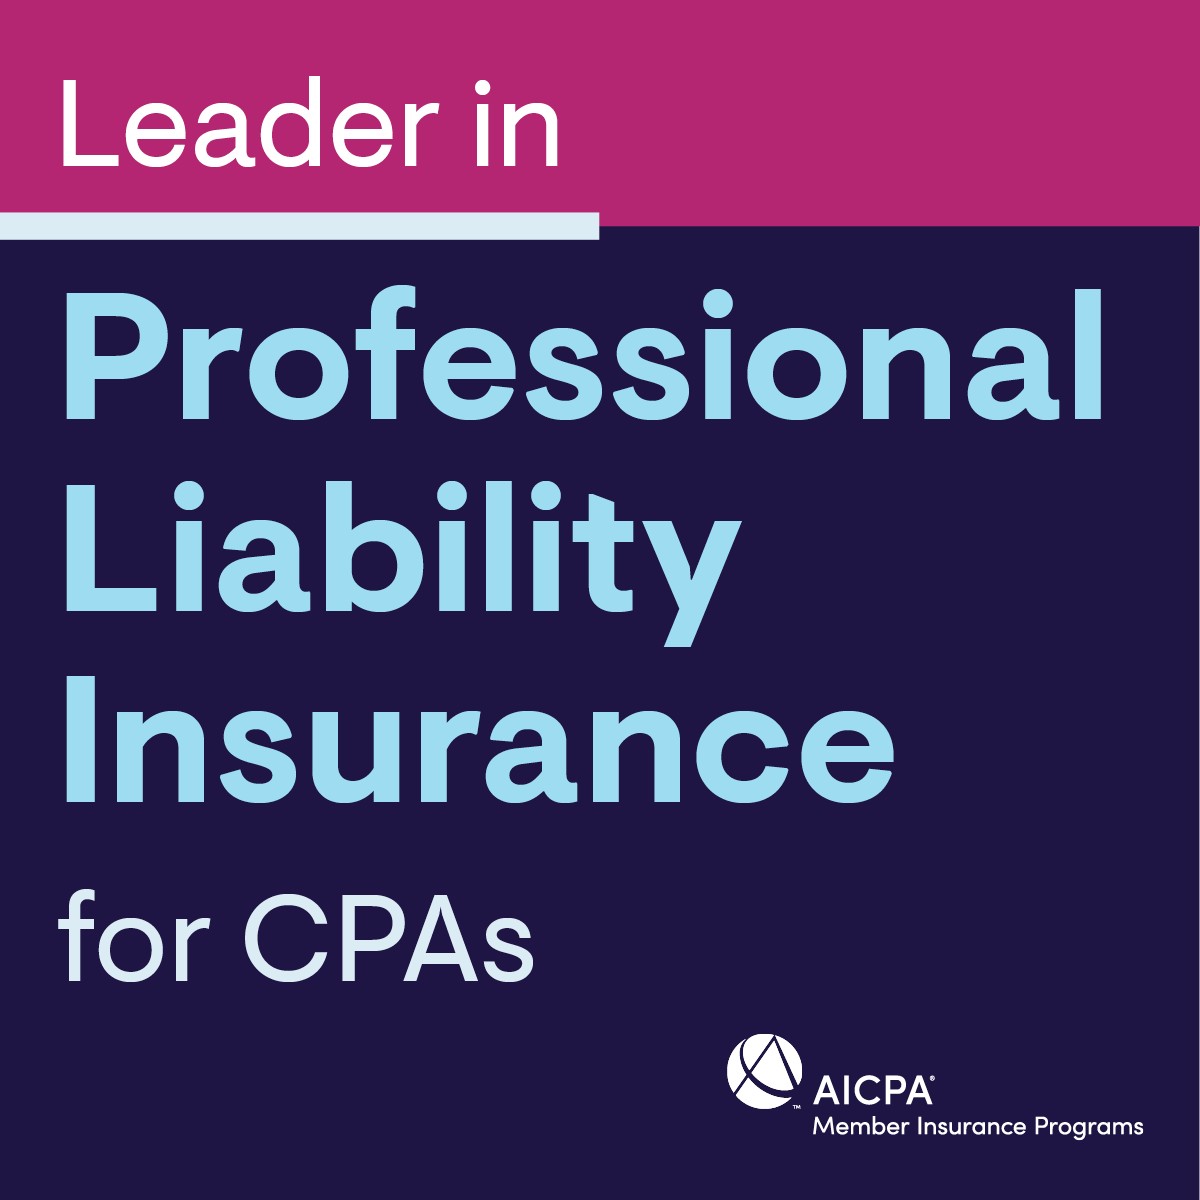 aicpa-member-insurance-programs-on-linkedin-aicpa-member-insurance